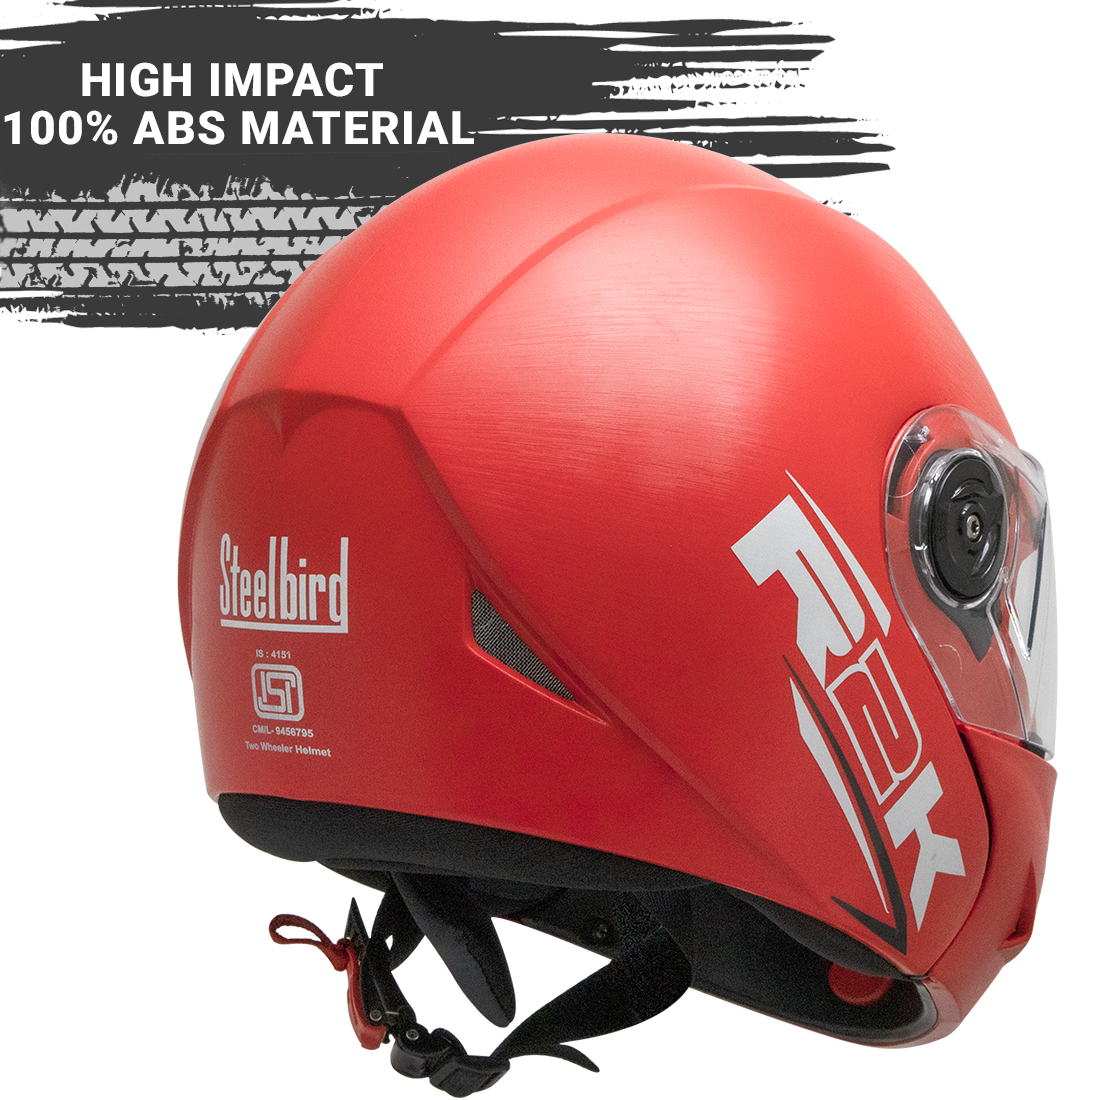 Steelbird SB-45 R2K Oska ISI Certified Flip Up Helmet (Red With Clear Visor)